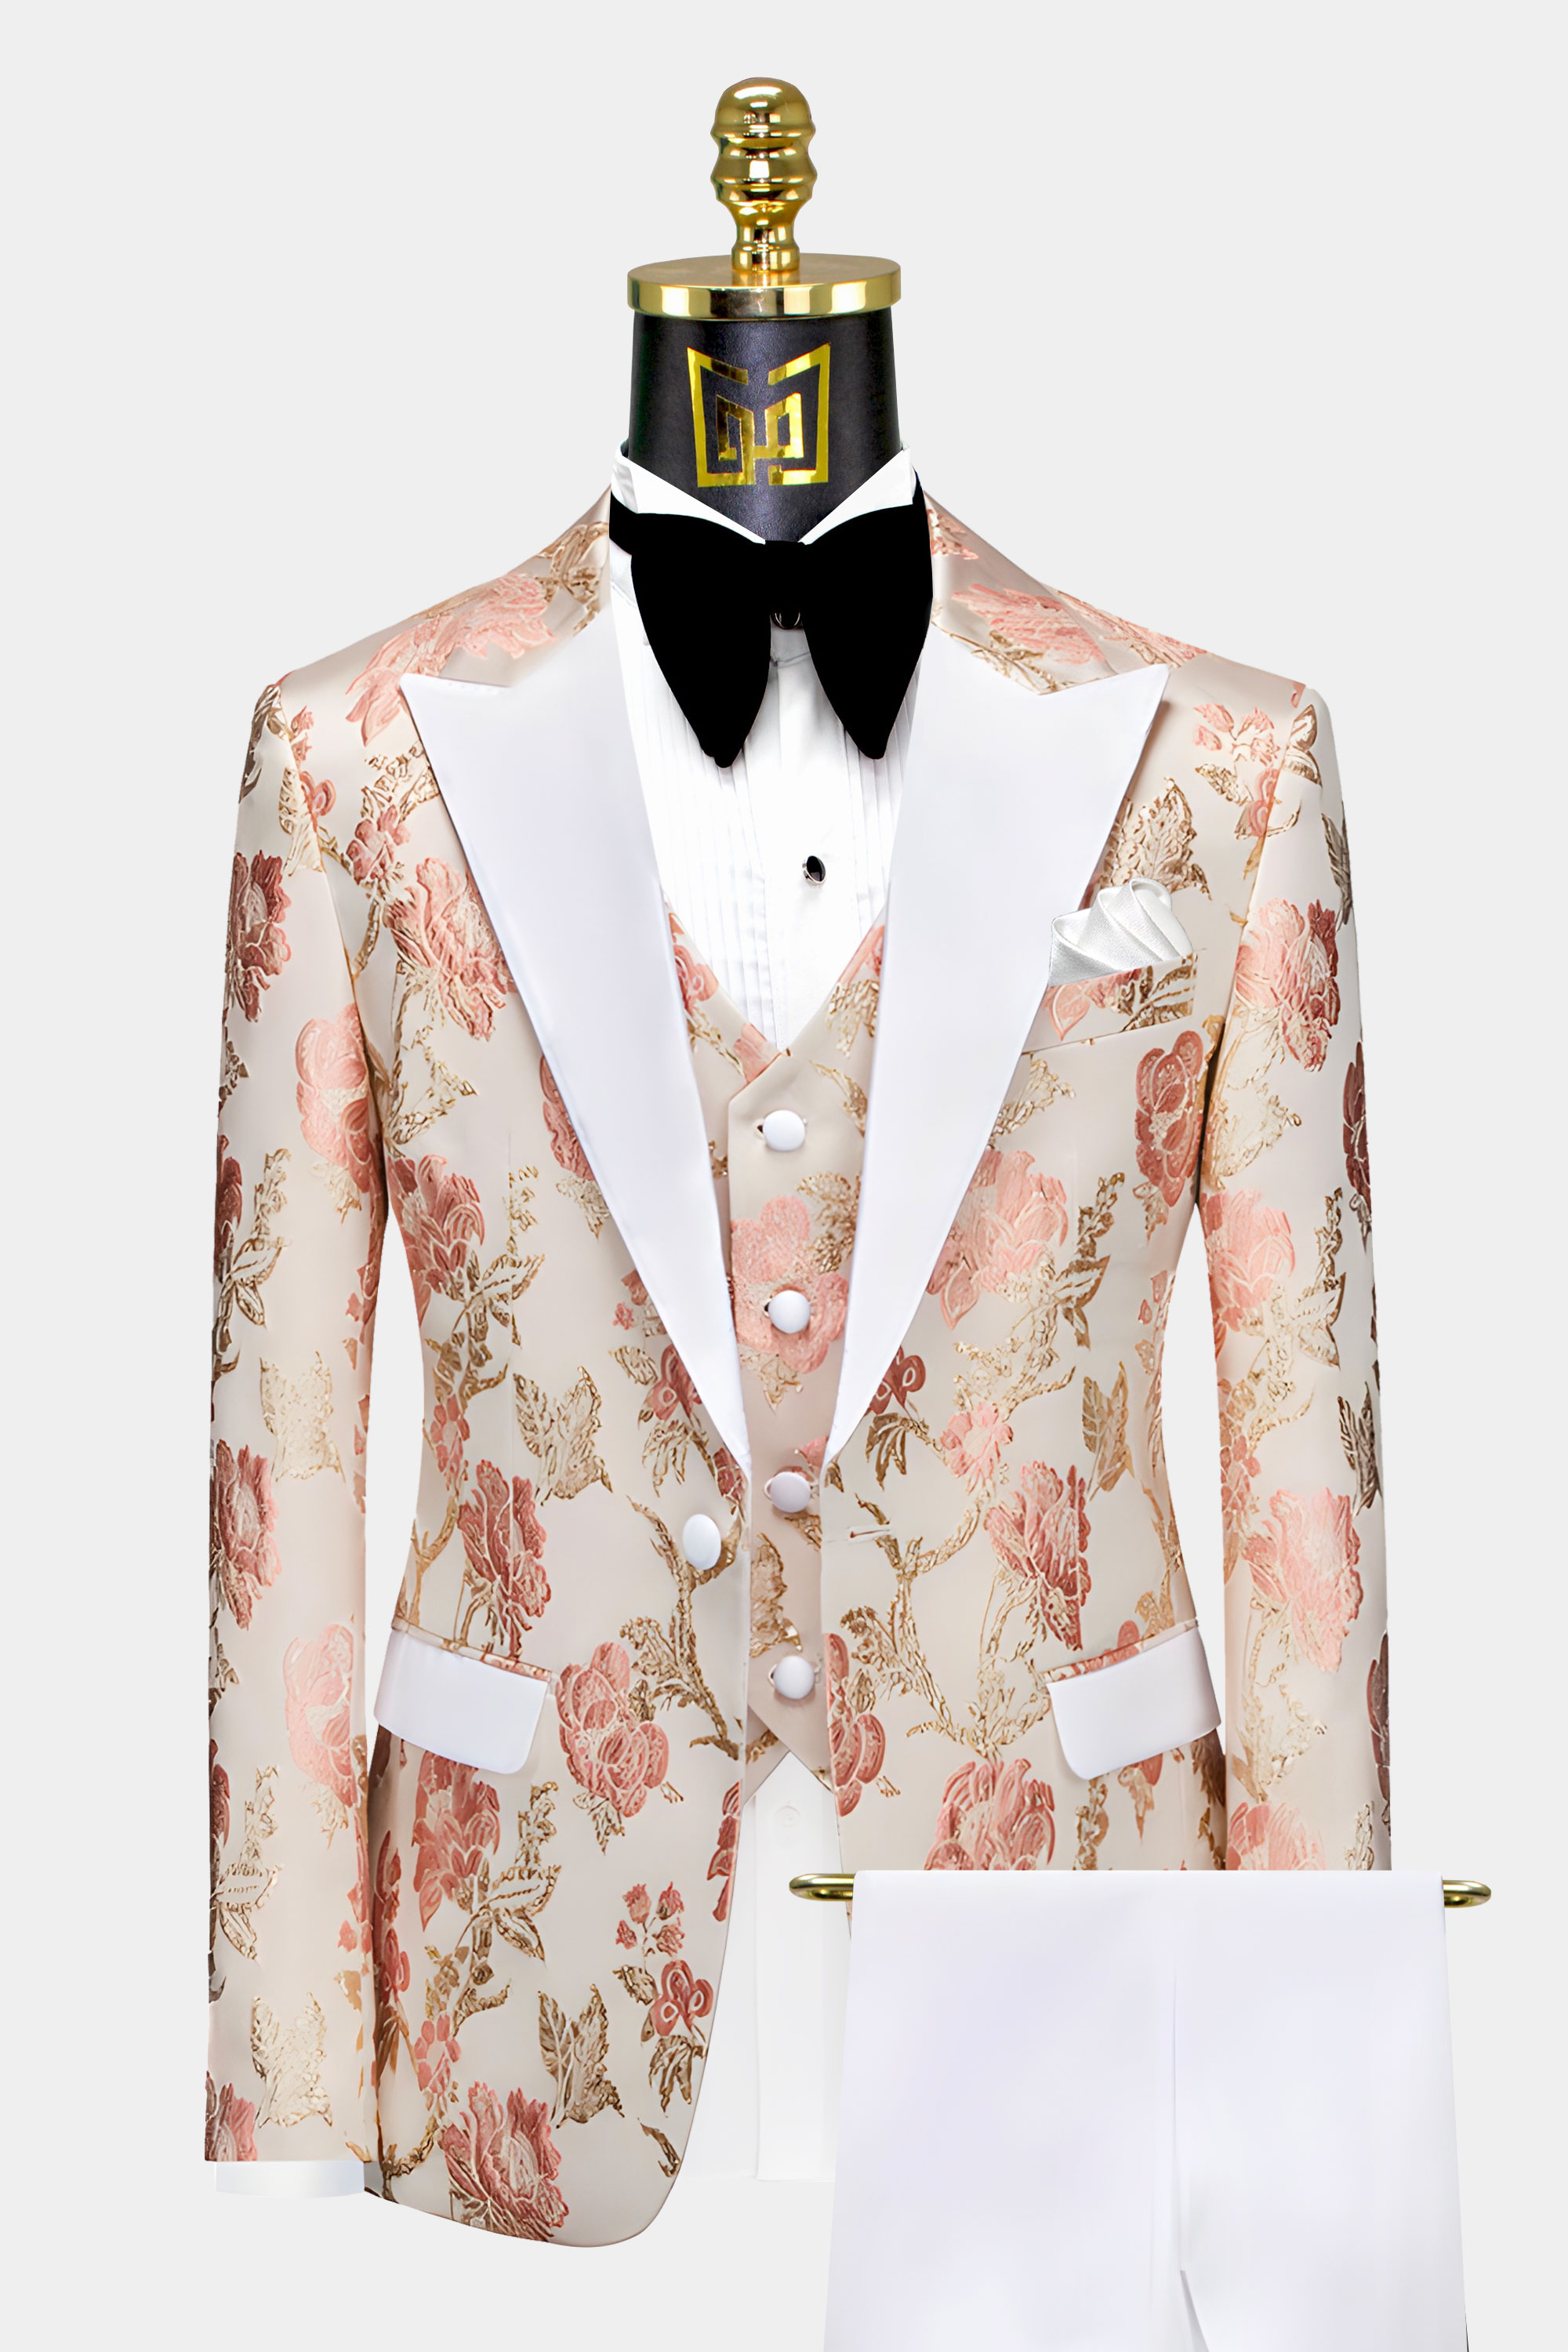 White-and-Rose-Gold-Groom-Wedding-Tuxedo-from-Gentlemansguru.com